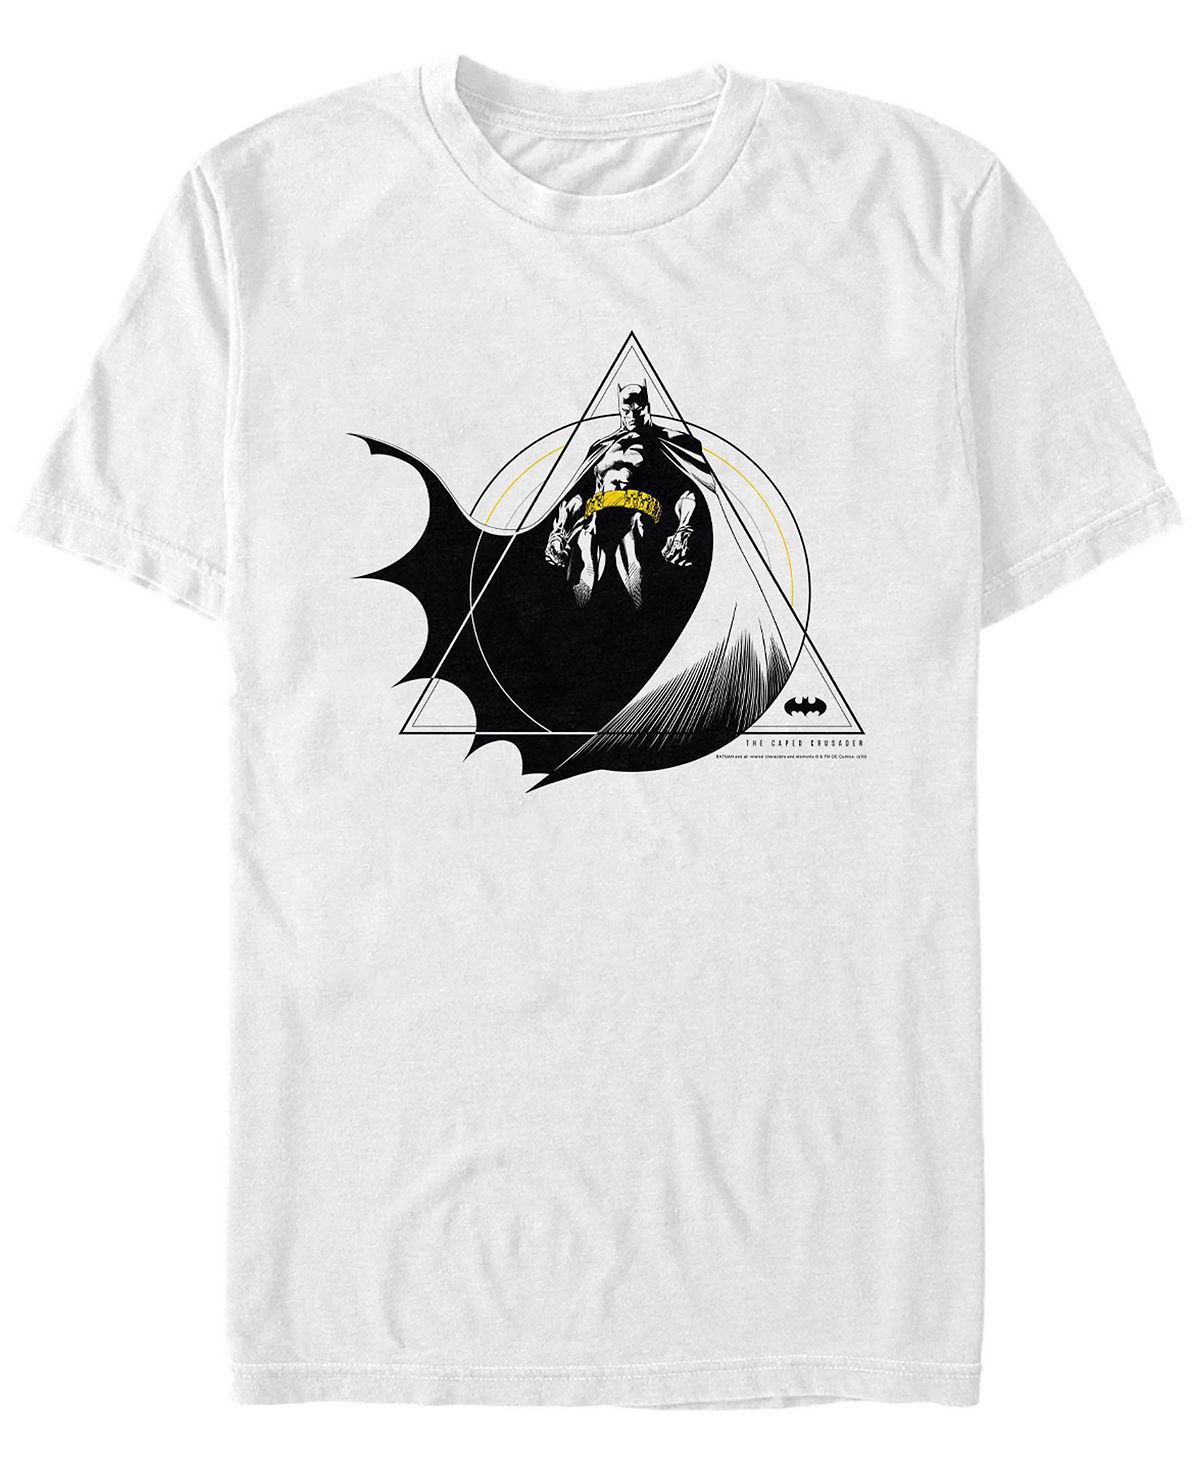 Мужская футболка с коротким рукавом batman power pose с геометрическим рисунком Fifth Sun, белый мужская футболка с коротким рукавом batman haha clown fifth sun